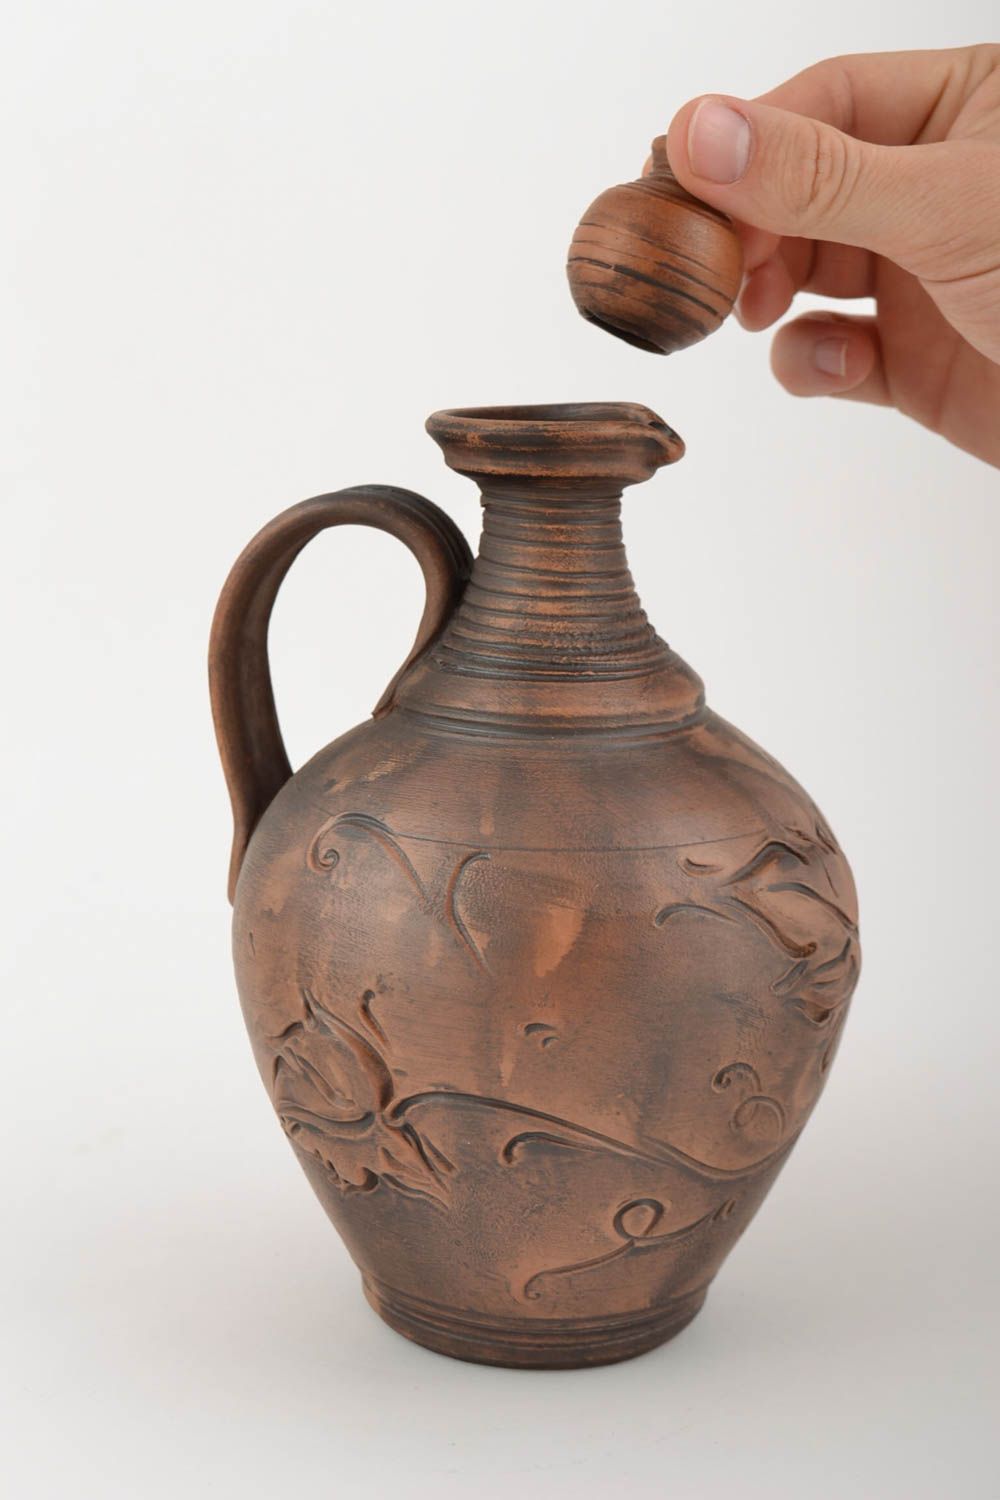 60 oz ceramic handmade wine jug carafe with handle and lid 1,95 lb photo 3